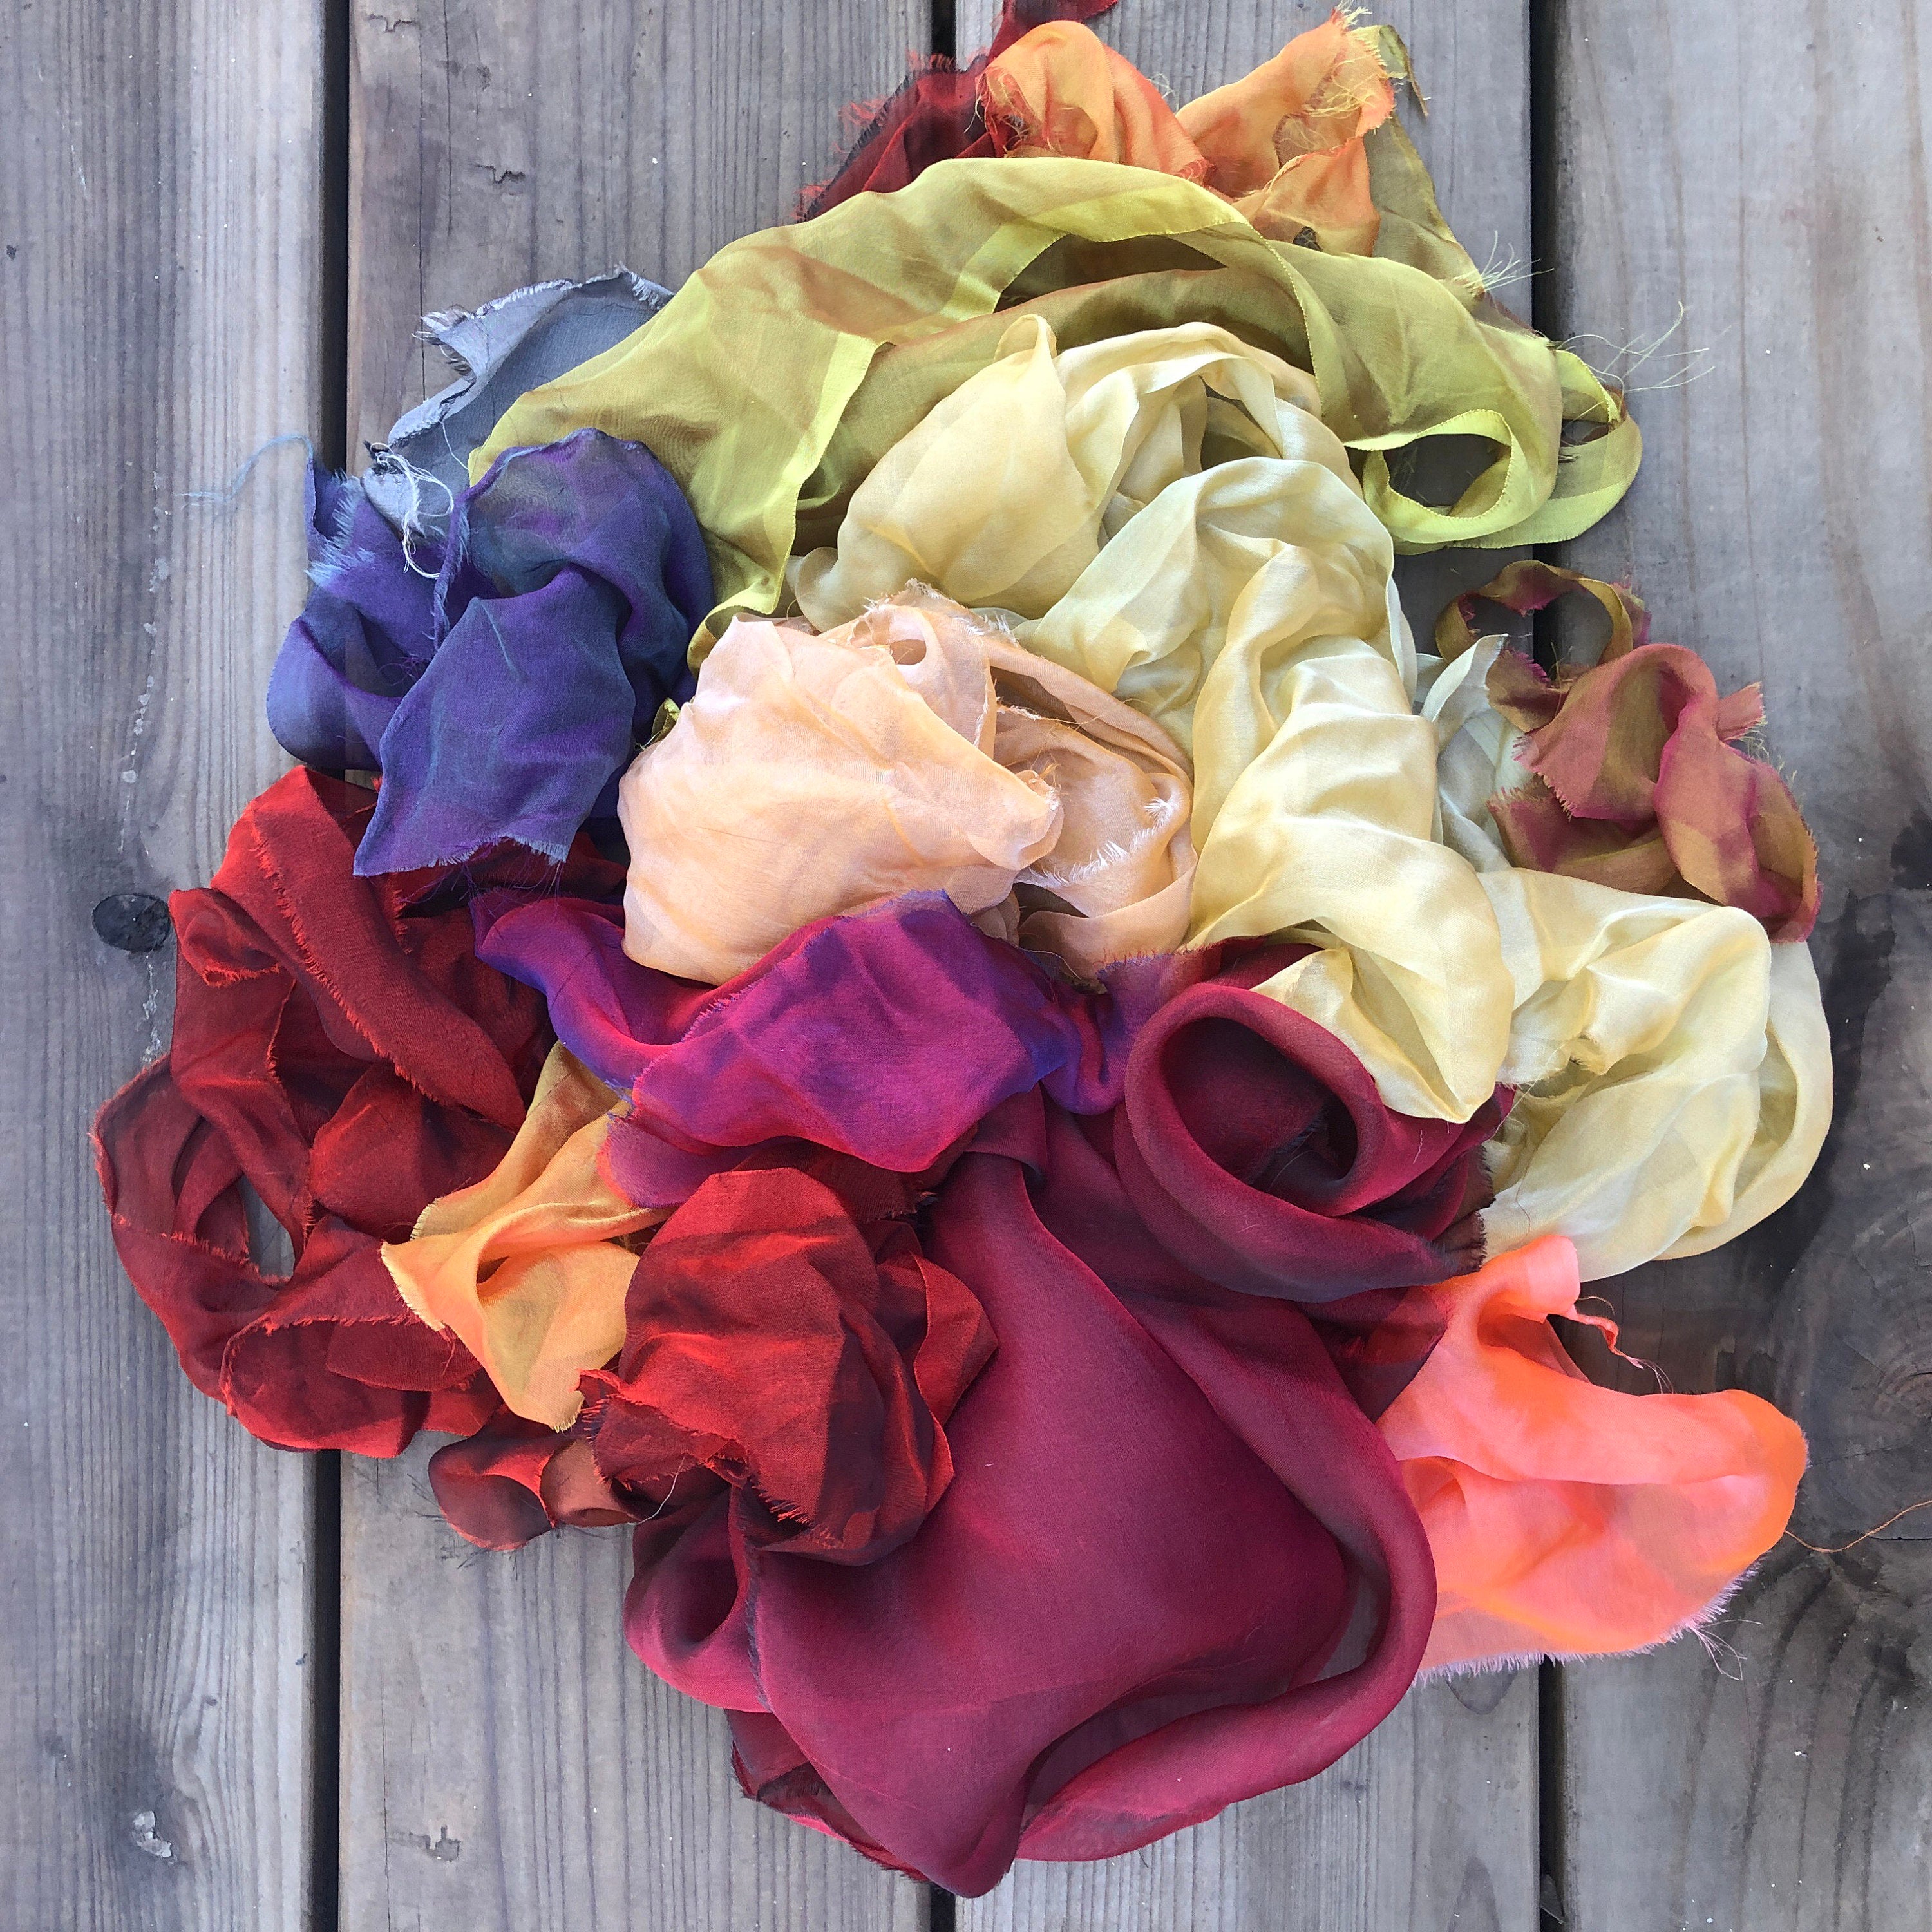 Iridescent Silk Chiffon Fabric by the Yard / Great for Nuno